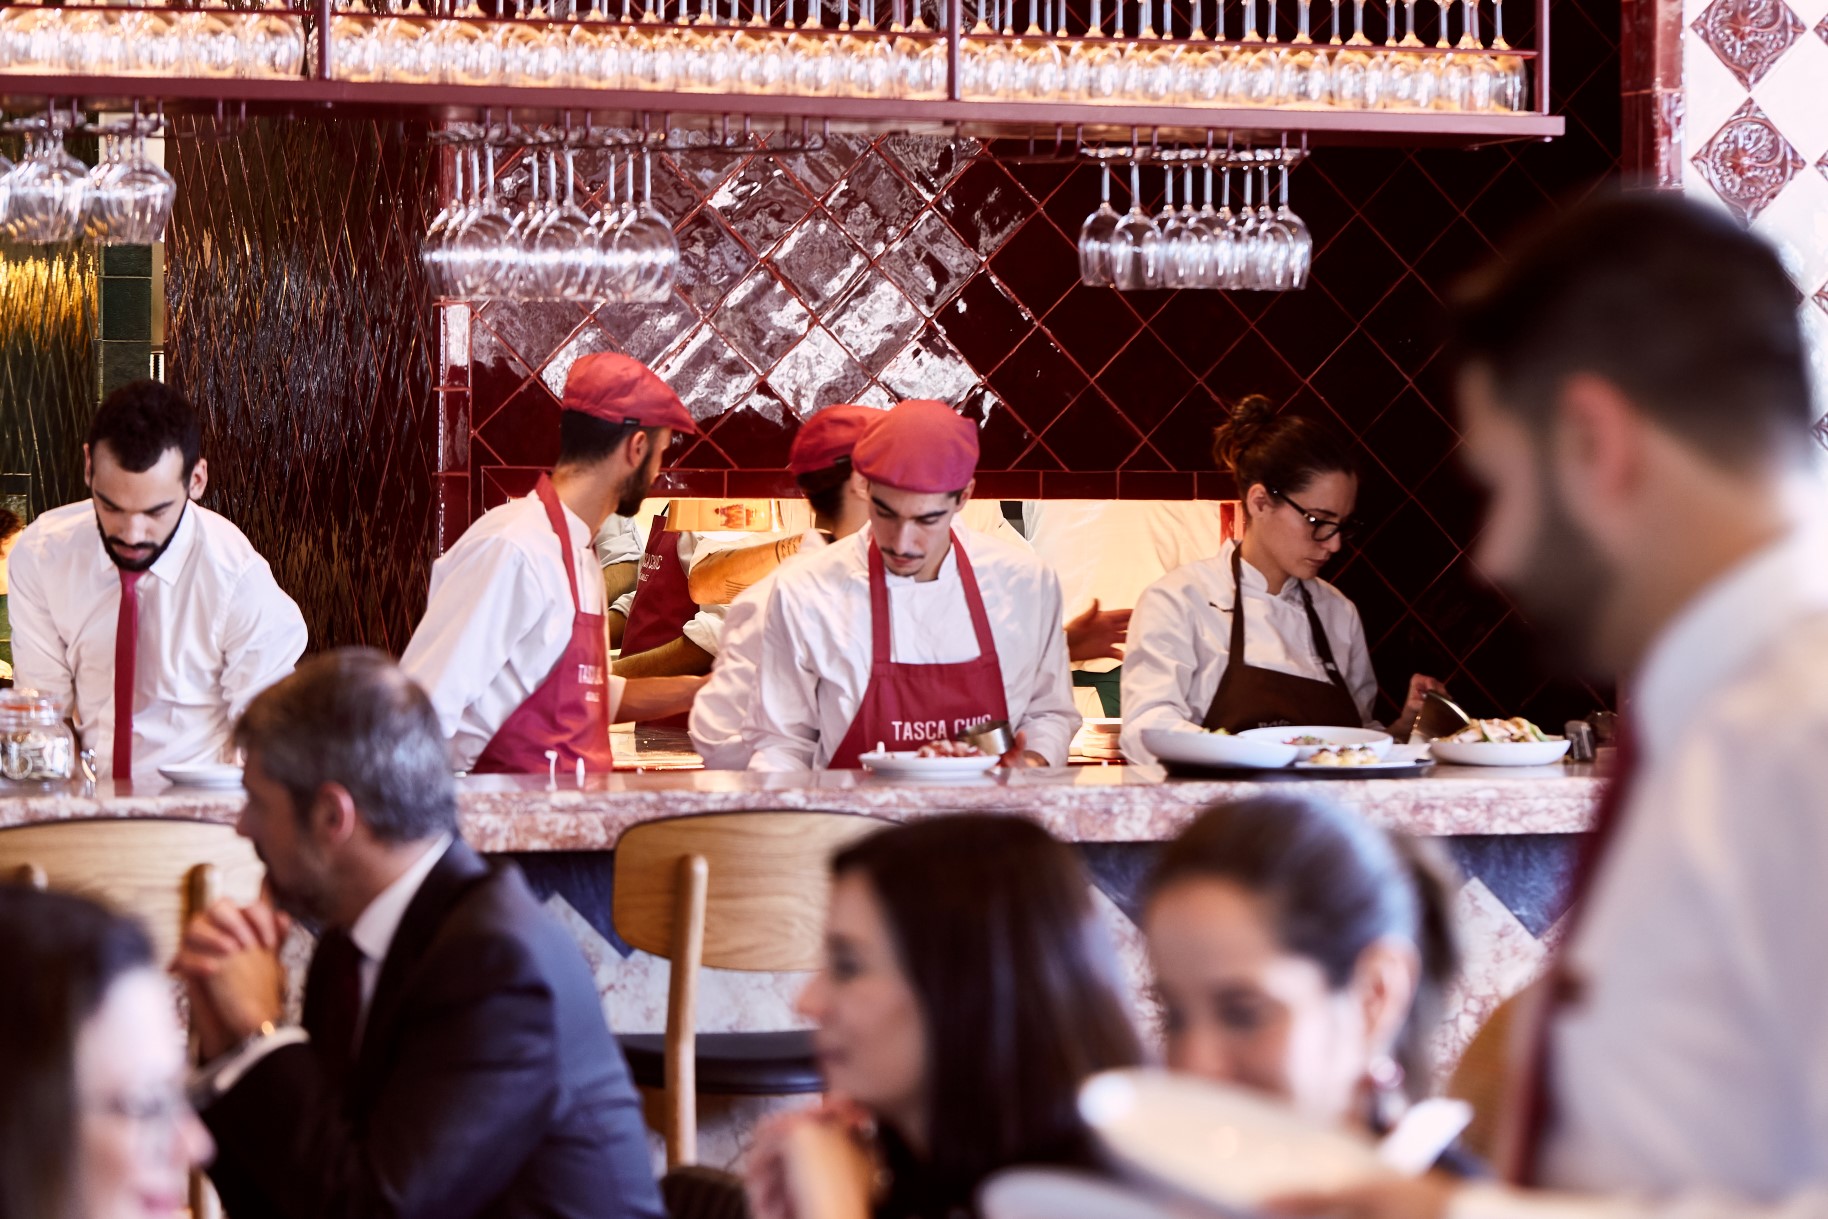 Michelin star chef José Avillez opens Tasca Chic in Gourmet Experience of El Corte Inglés Lisbon.